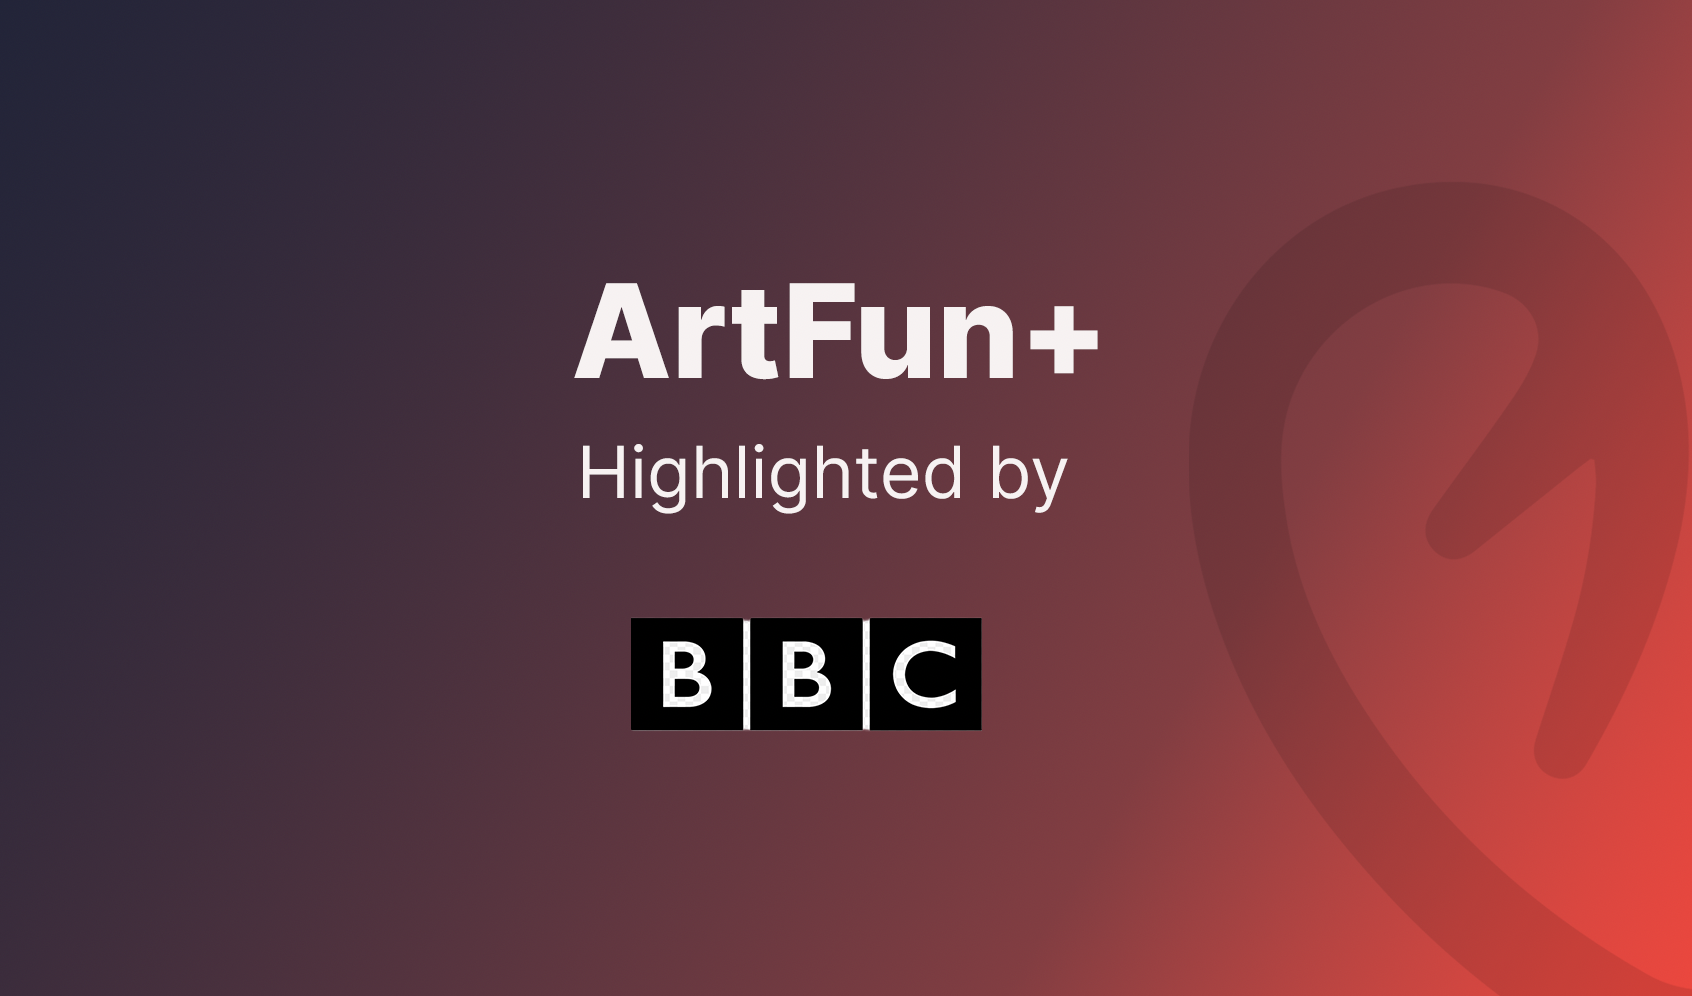 Artfun+ Technology Highlighted by BBC News